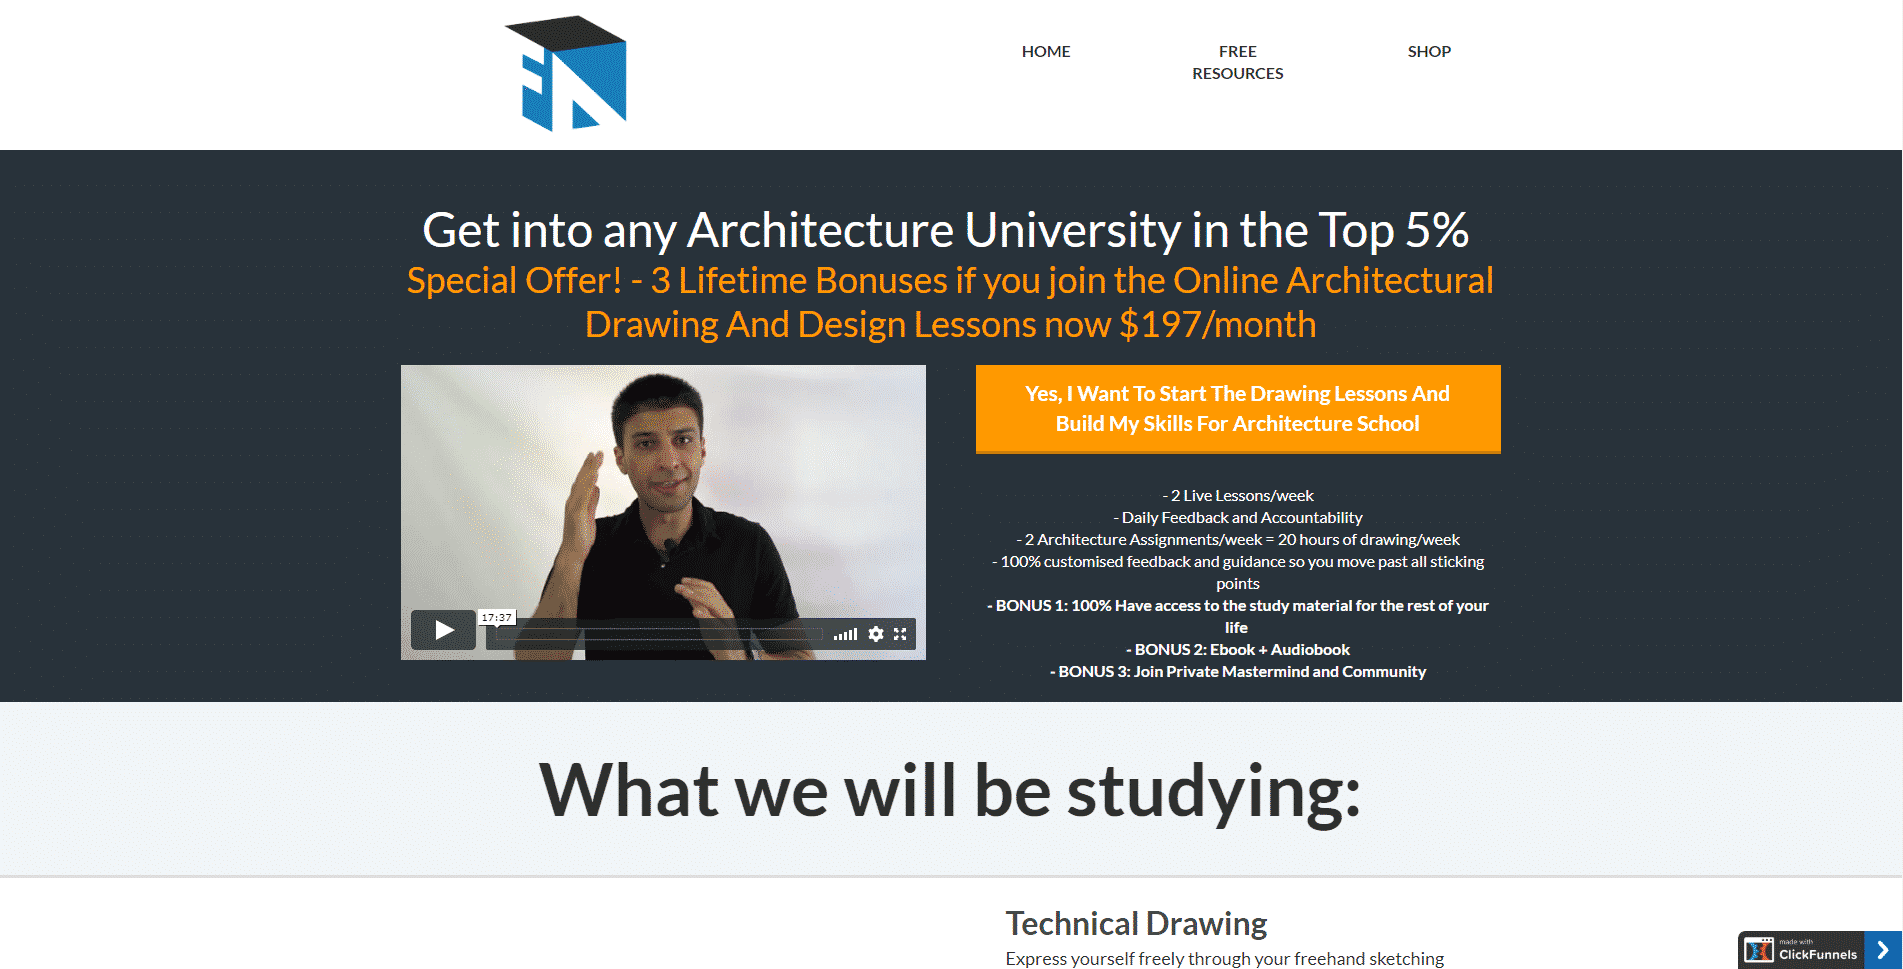 Freeandarchitecture.com Learn Design and Architecture Lessons Online